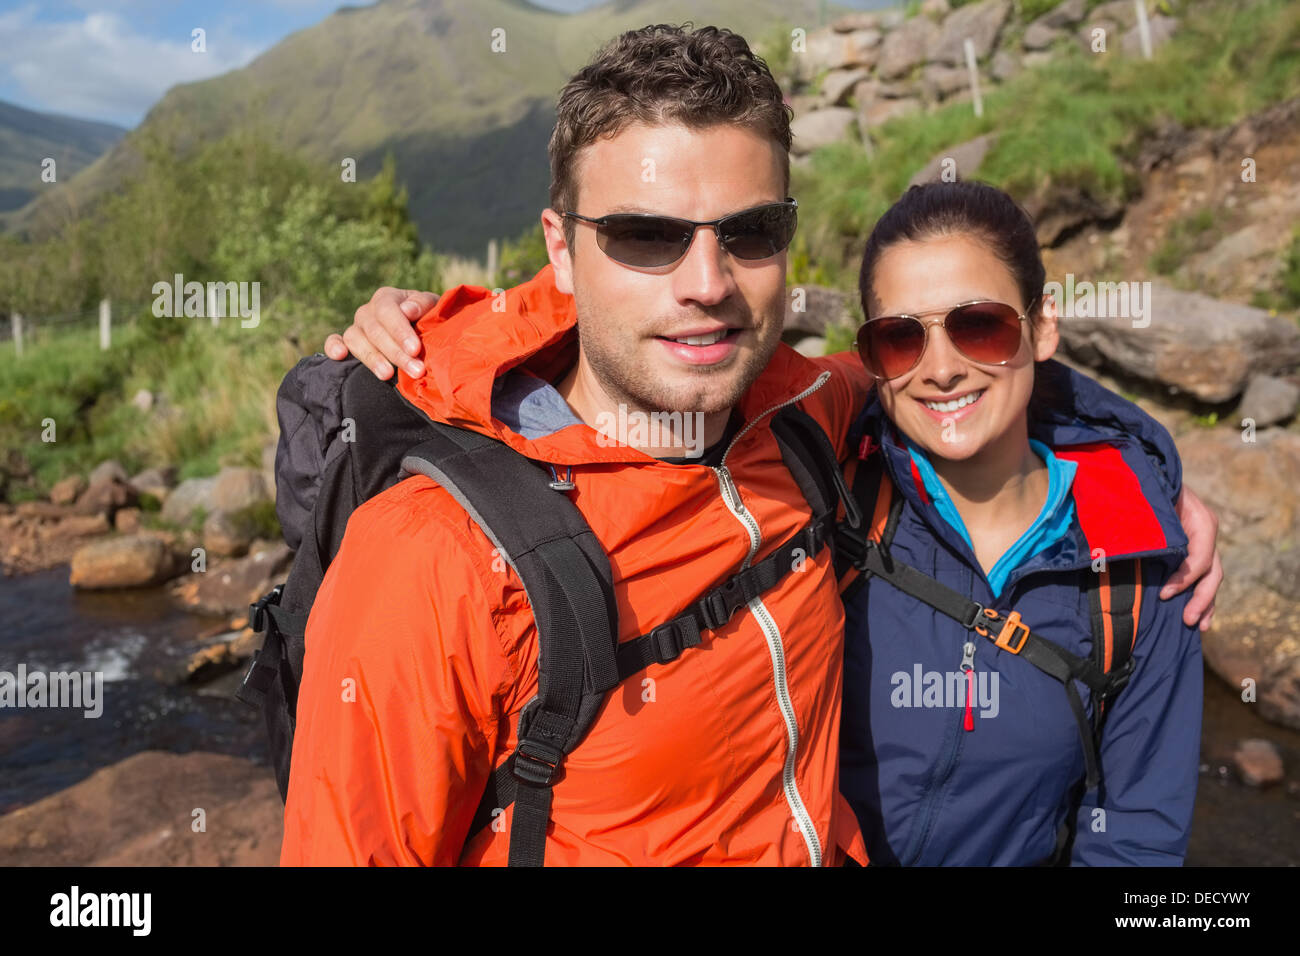 Couple wearing rain jackets and sunglasses smiling at camera Stock Photo